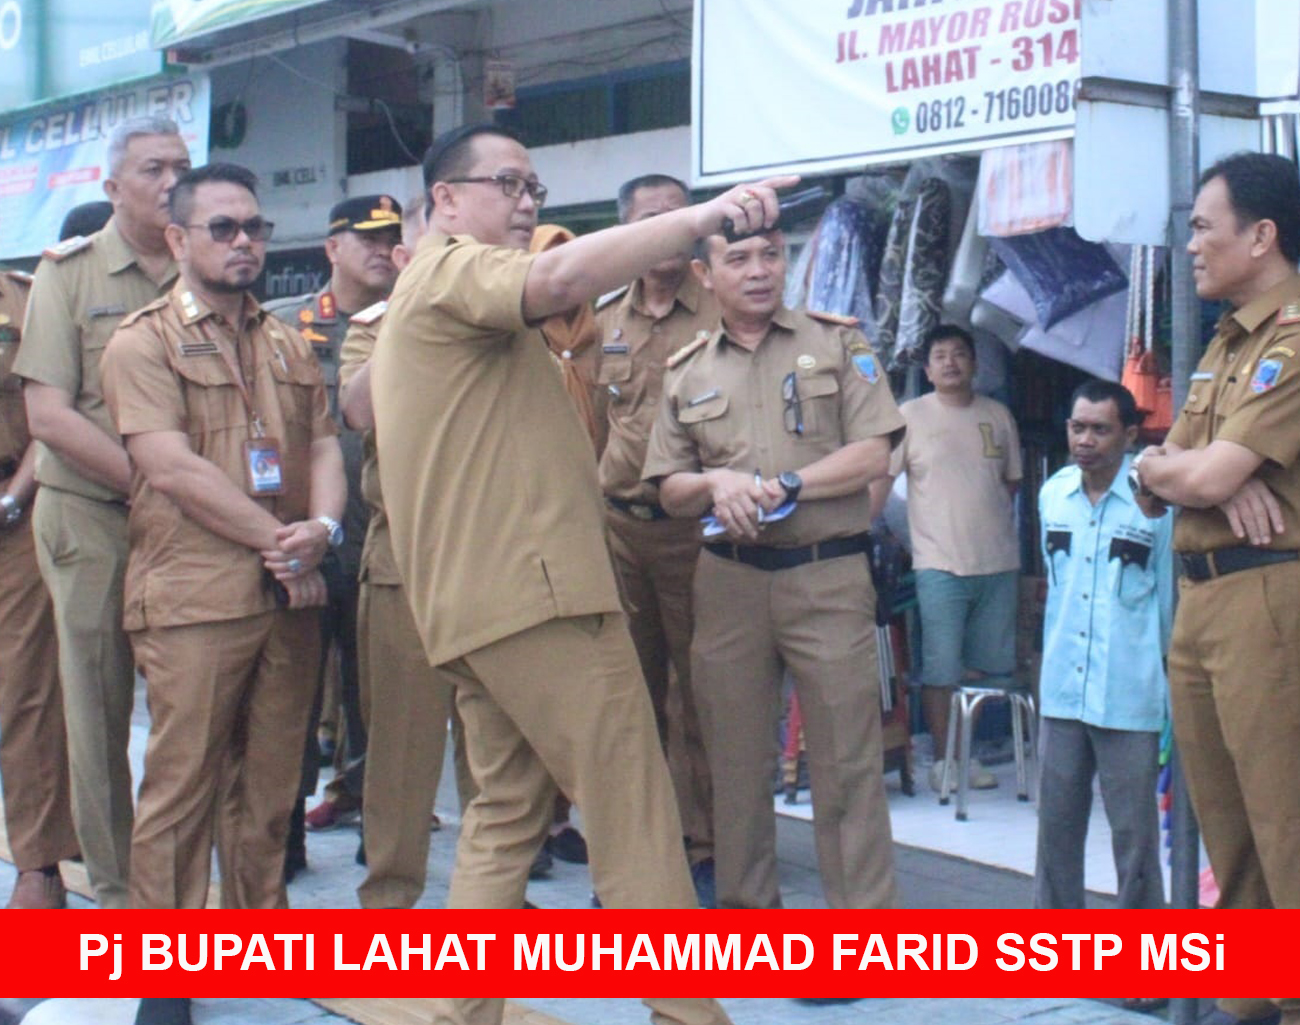 Pj Bupati Lahat Muhammad Farid Ajak Kepala OPD Tinjau Kondisi Pasar Kota Lahat, Pedagang Keluhkan Air Hujan